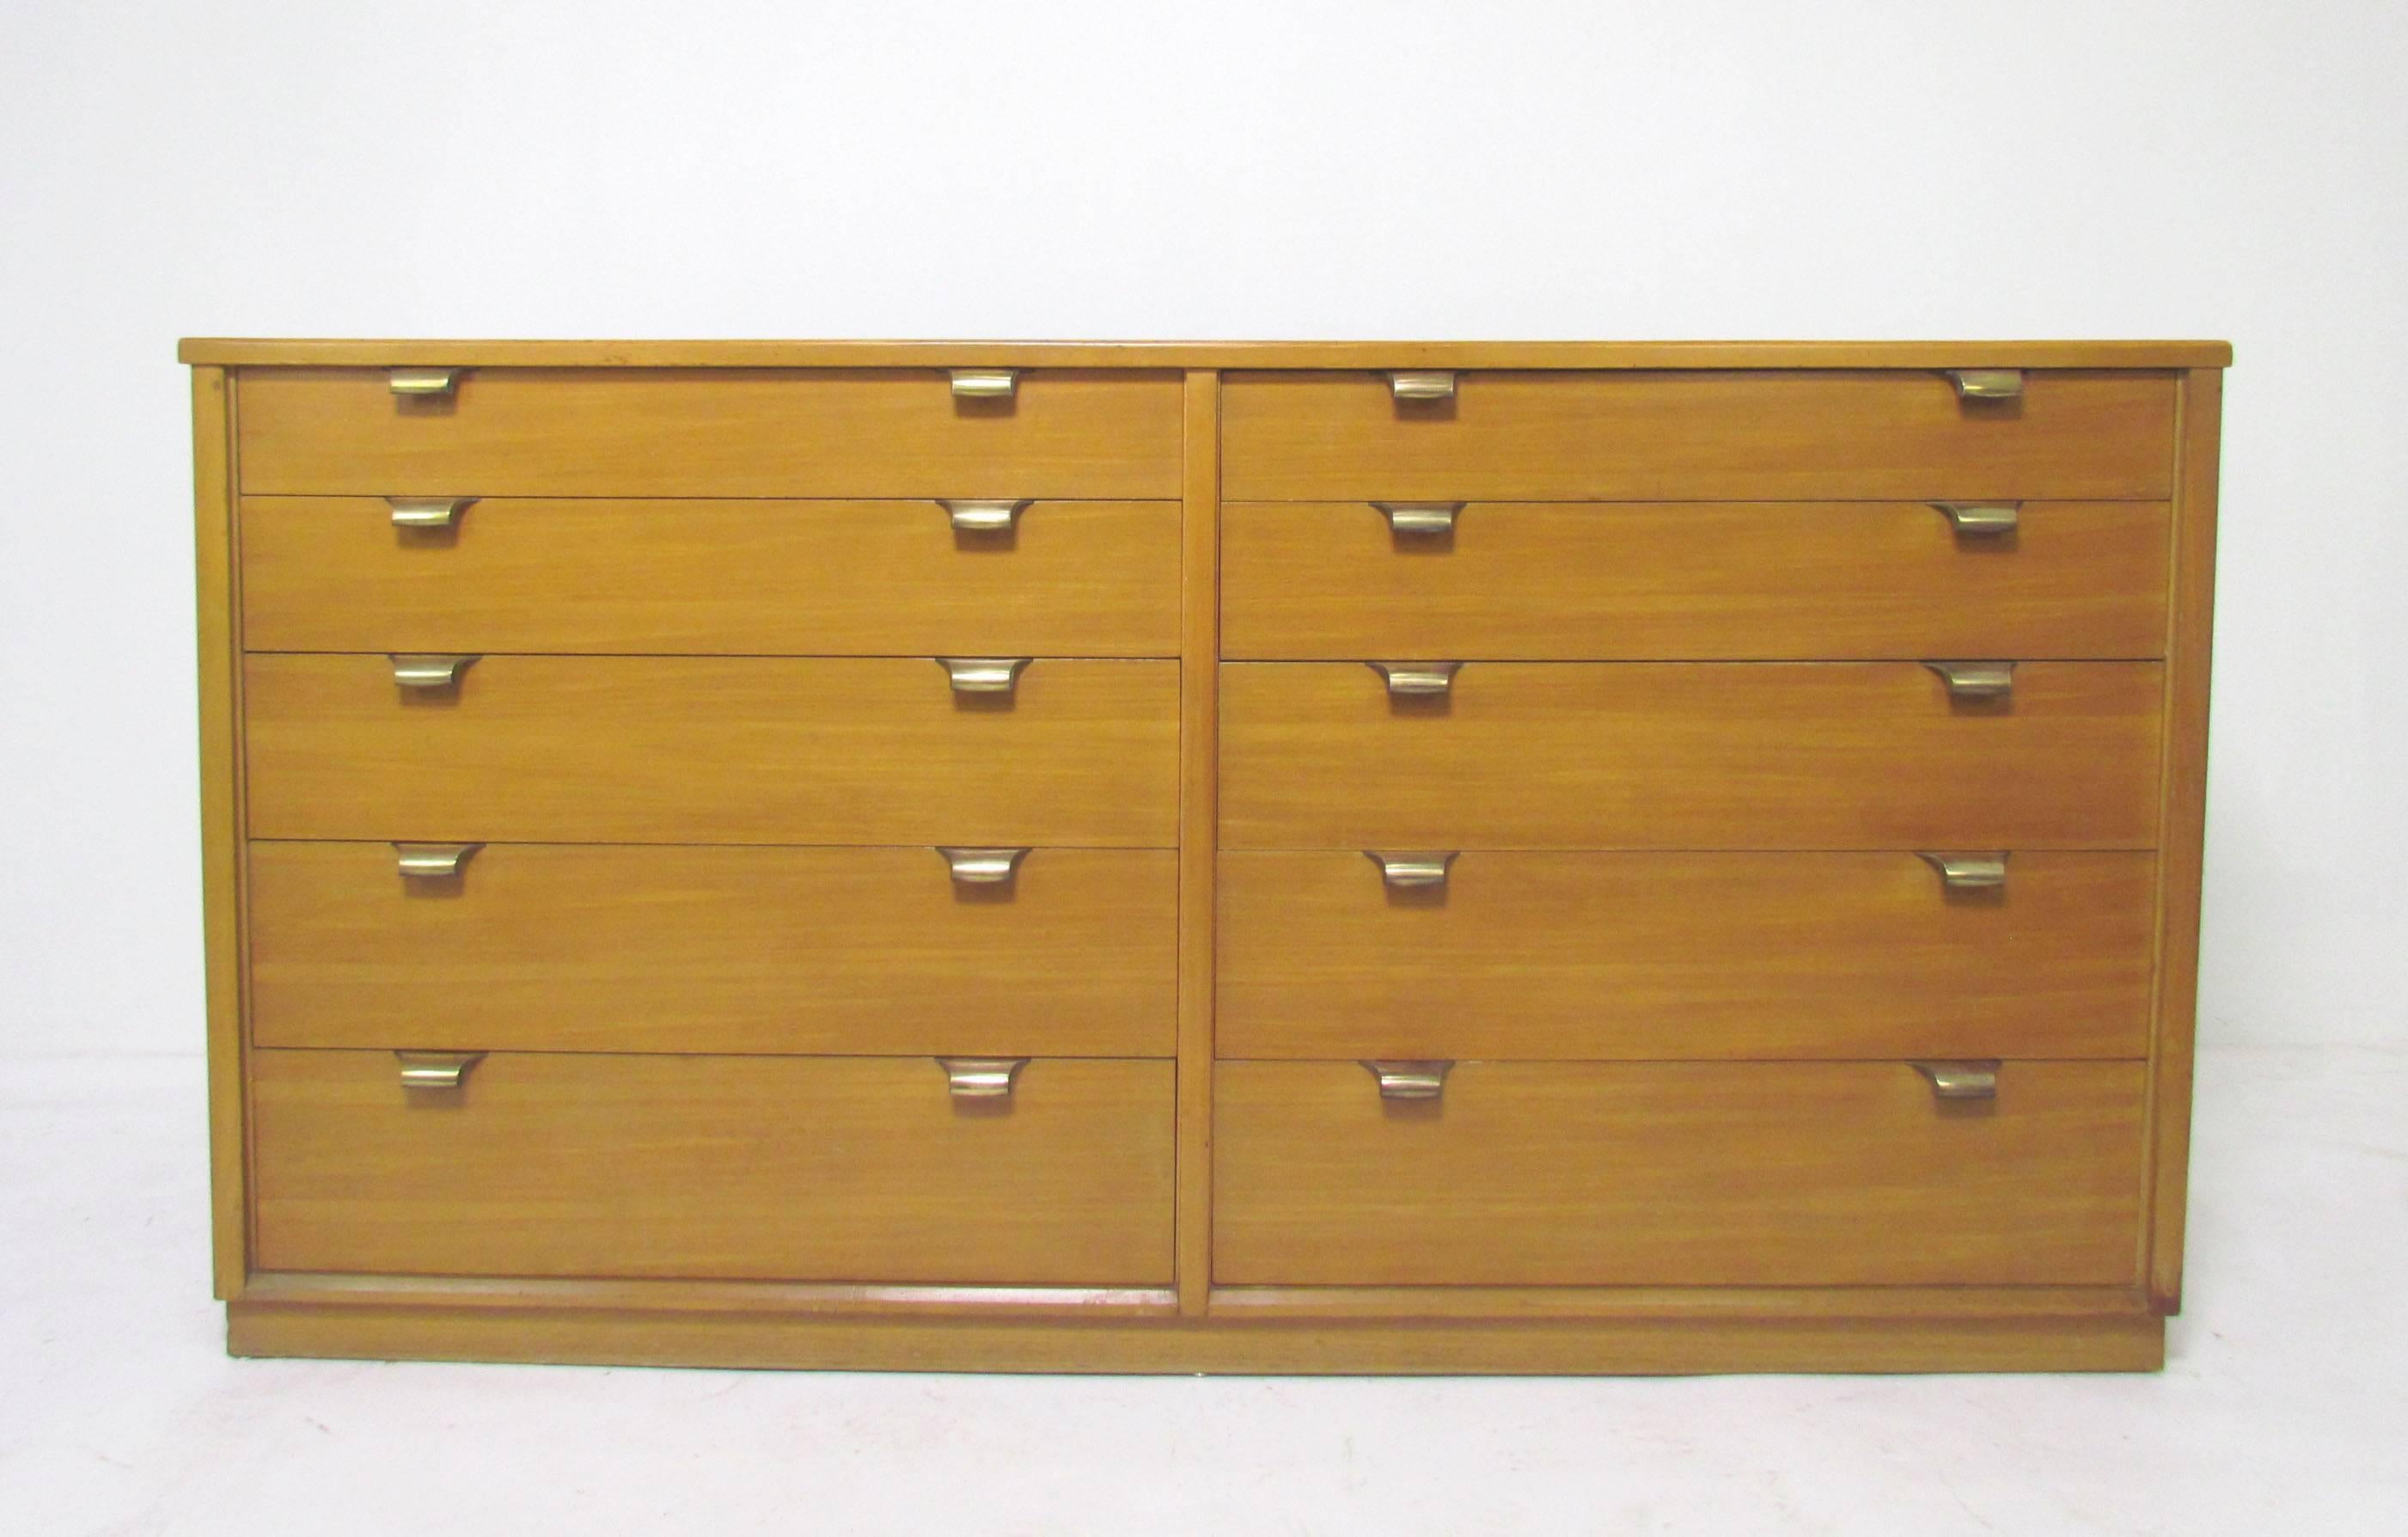 Ten-drawer dresser in glazed elm with brass hardware, designed by Edward Wormley for Drexel’s Precedent Line, dated 1949.